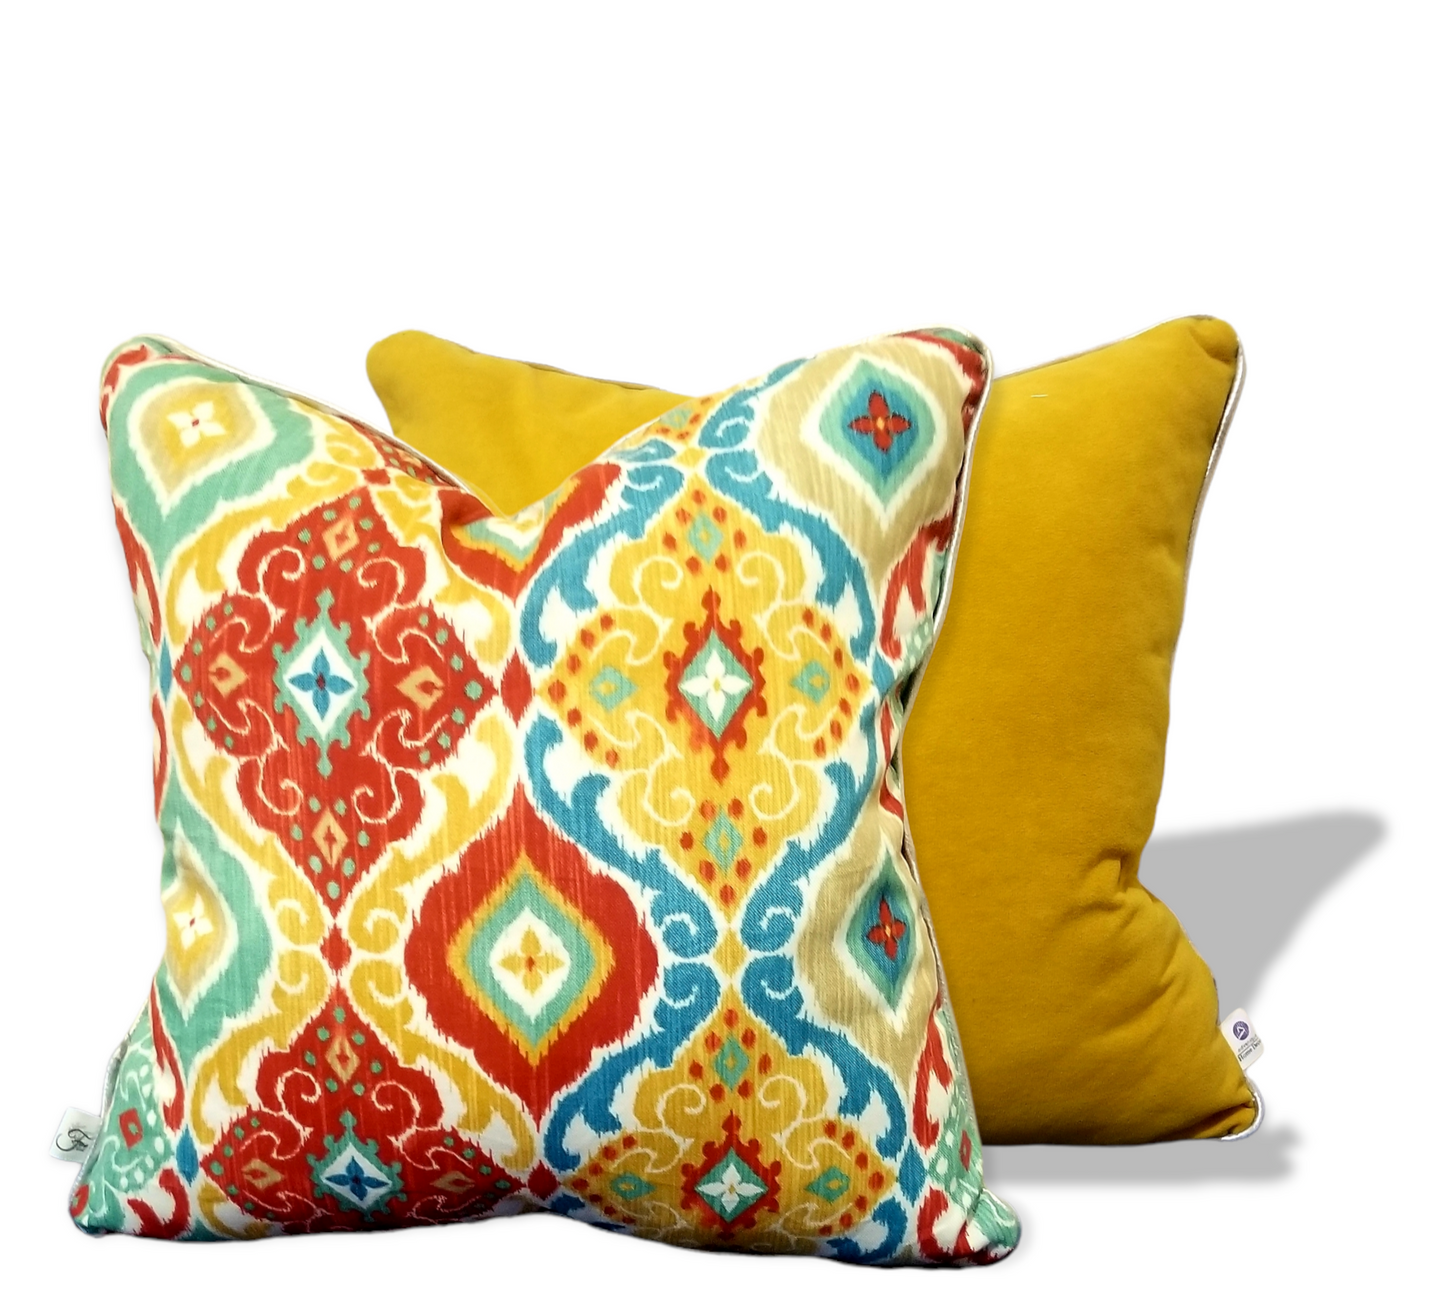 Fresca Fiesta Decorative Designer Throw/Accent Pillow. - Advenique Home Decor